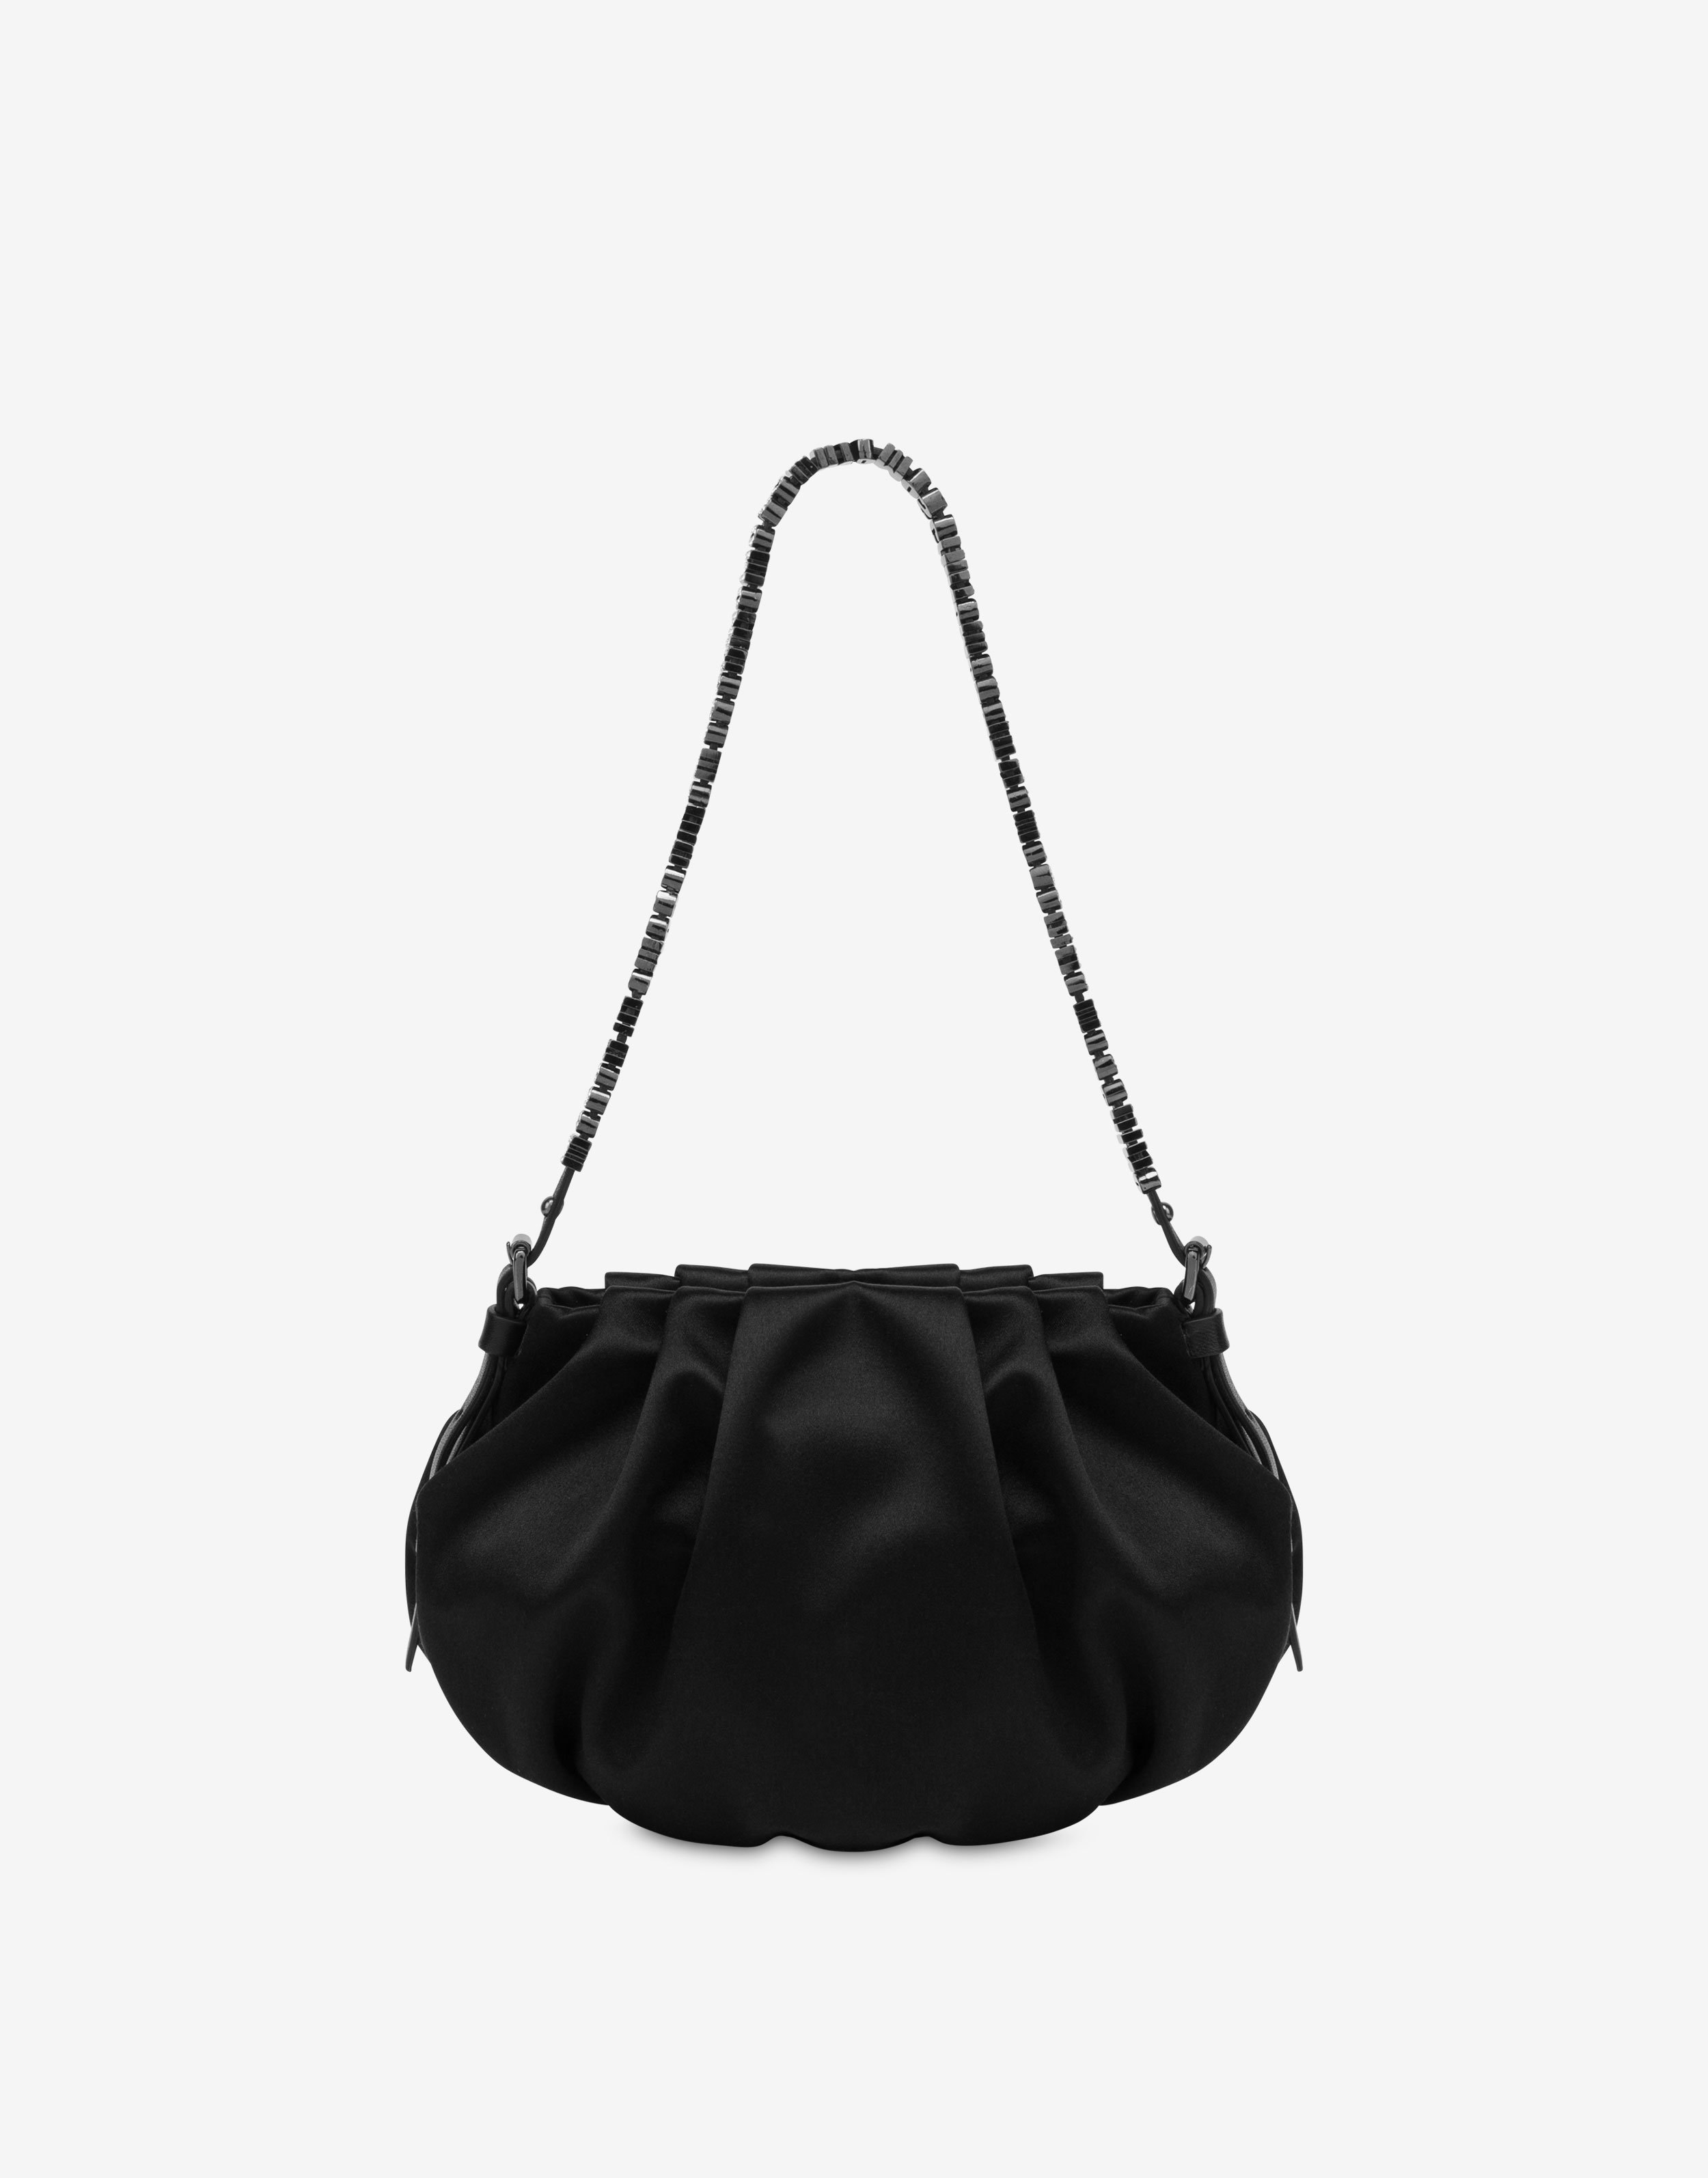 Women's handbag or shoulder bag LOVE MOSCHINO item JC4153PP17LO BORSA  CANVAS